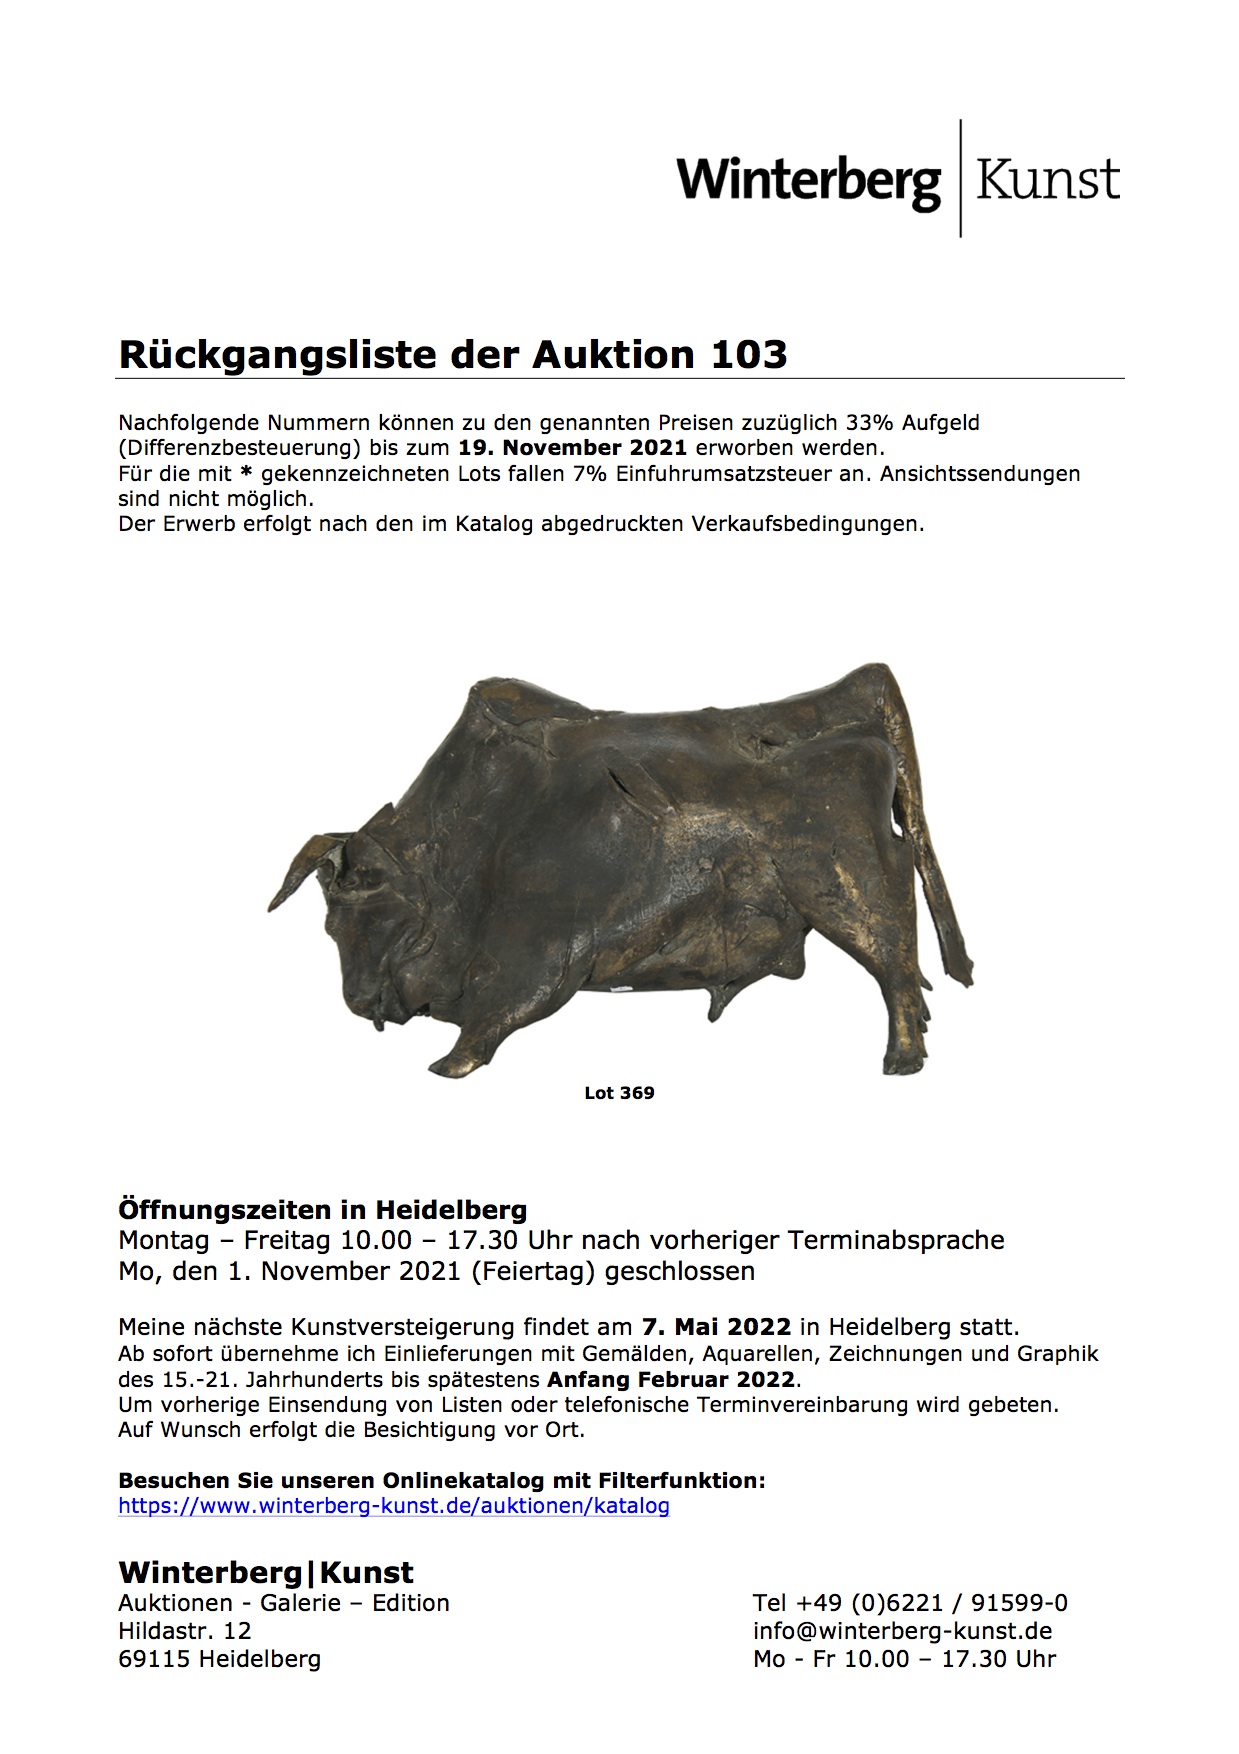 Auktion 103 – Oktober 2021